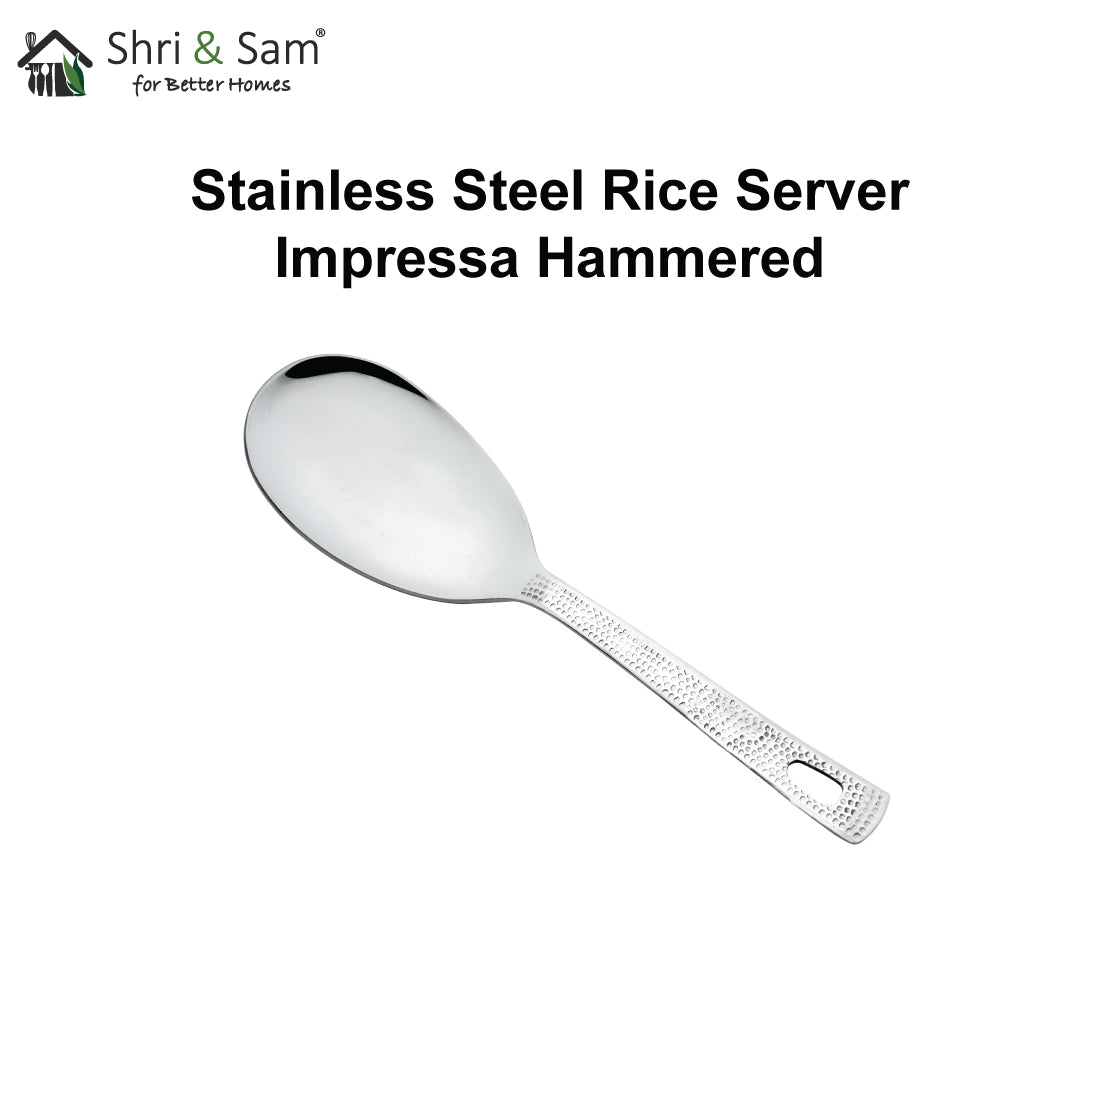 Stainless Steel Rice Server Impressa Hammered